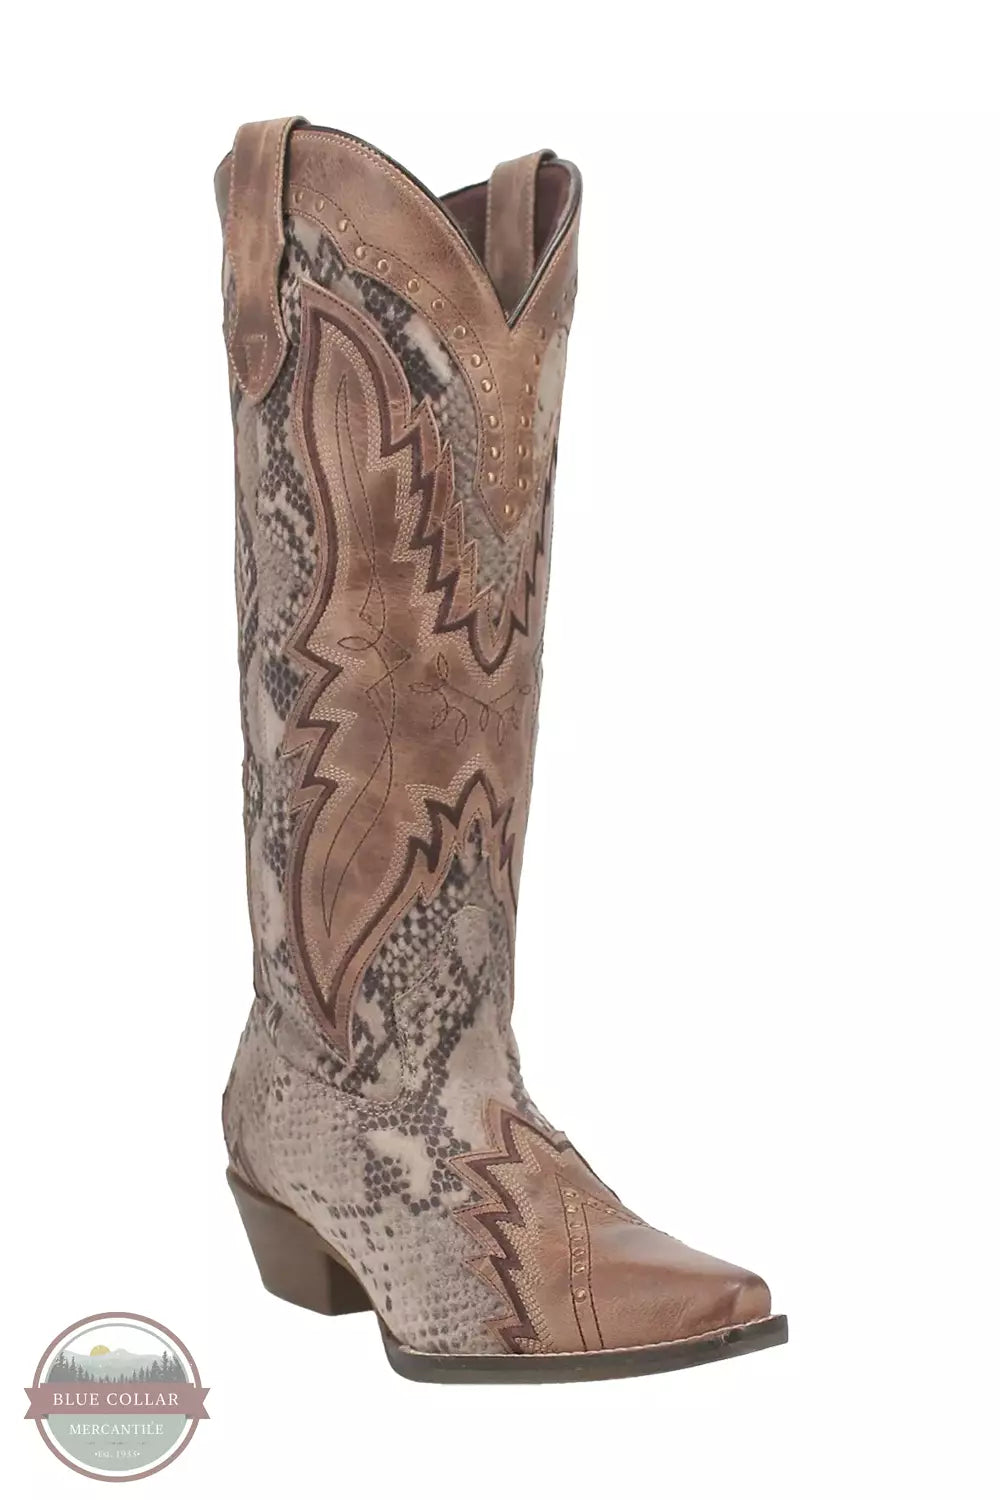 Laredo 52461 Shawnee Western Boot in Tan & Snake Print Profile View